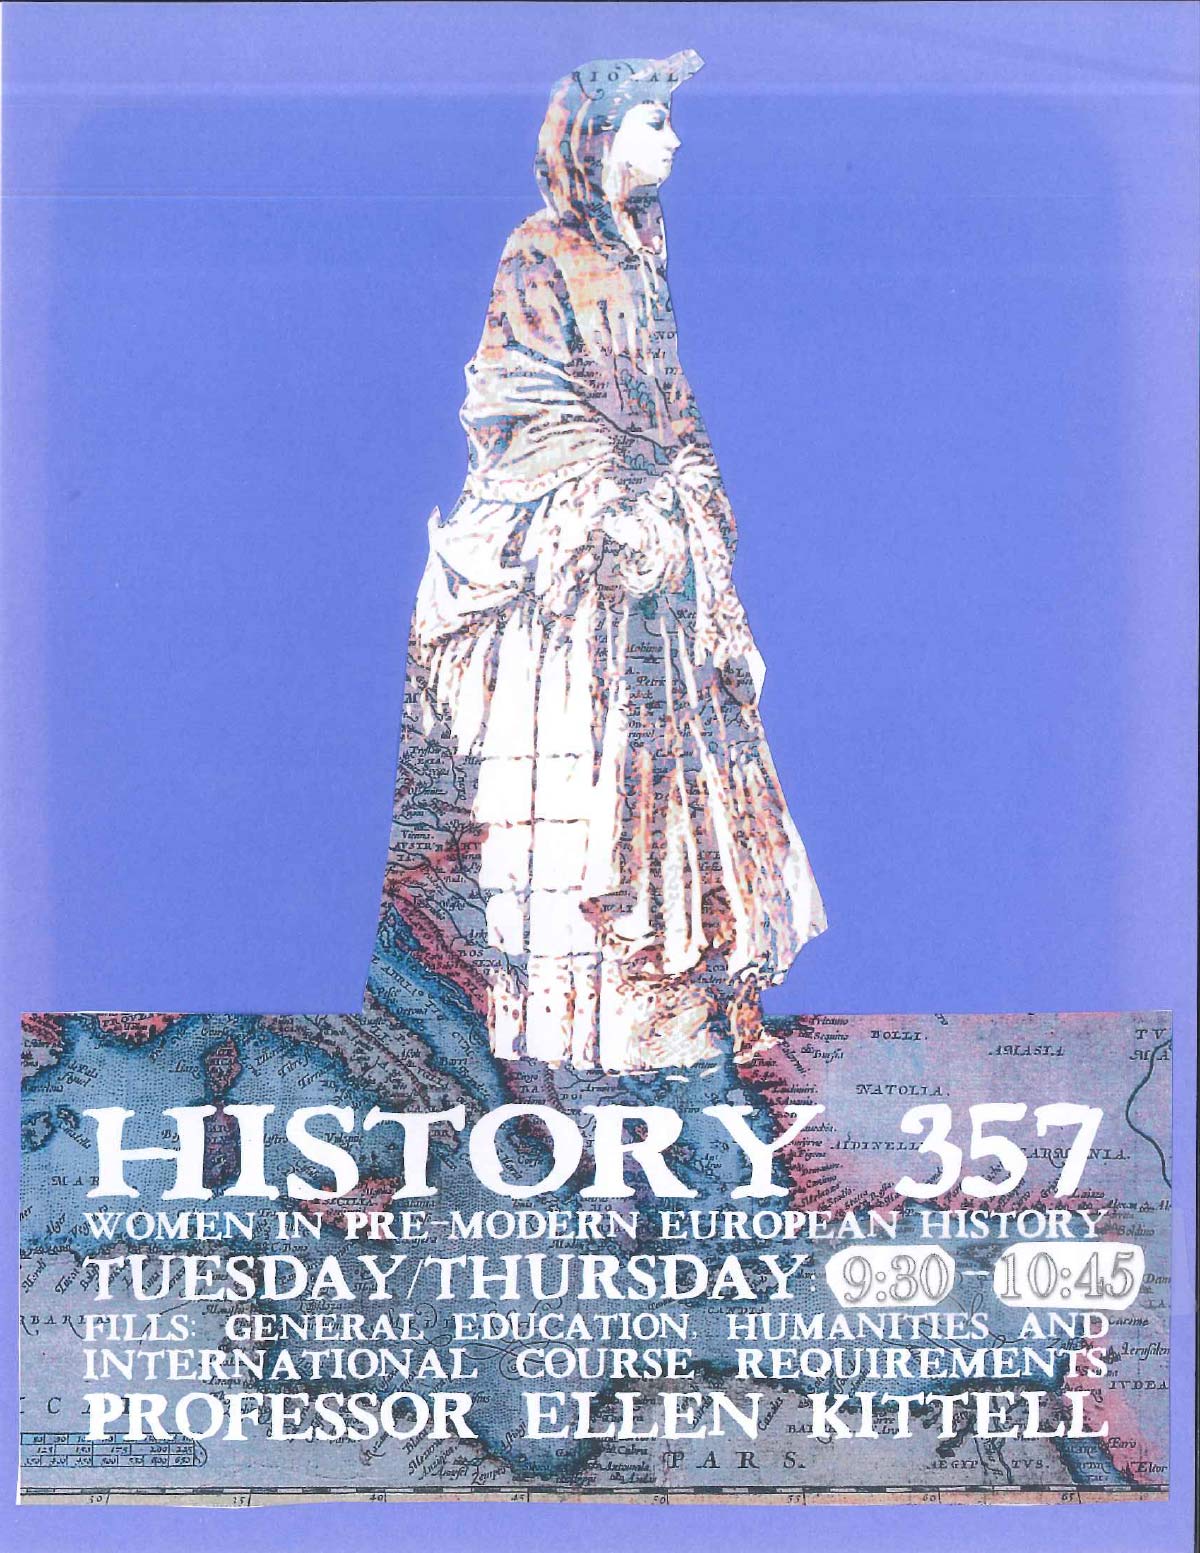 Class: History 357; Woman in pre-modern European history.